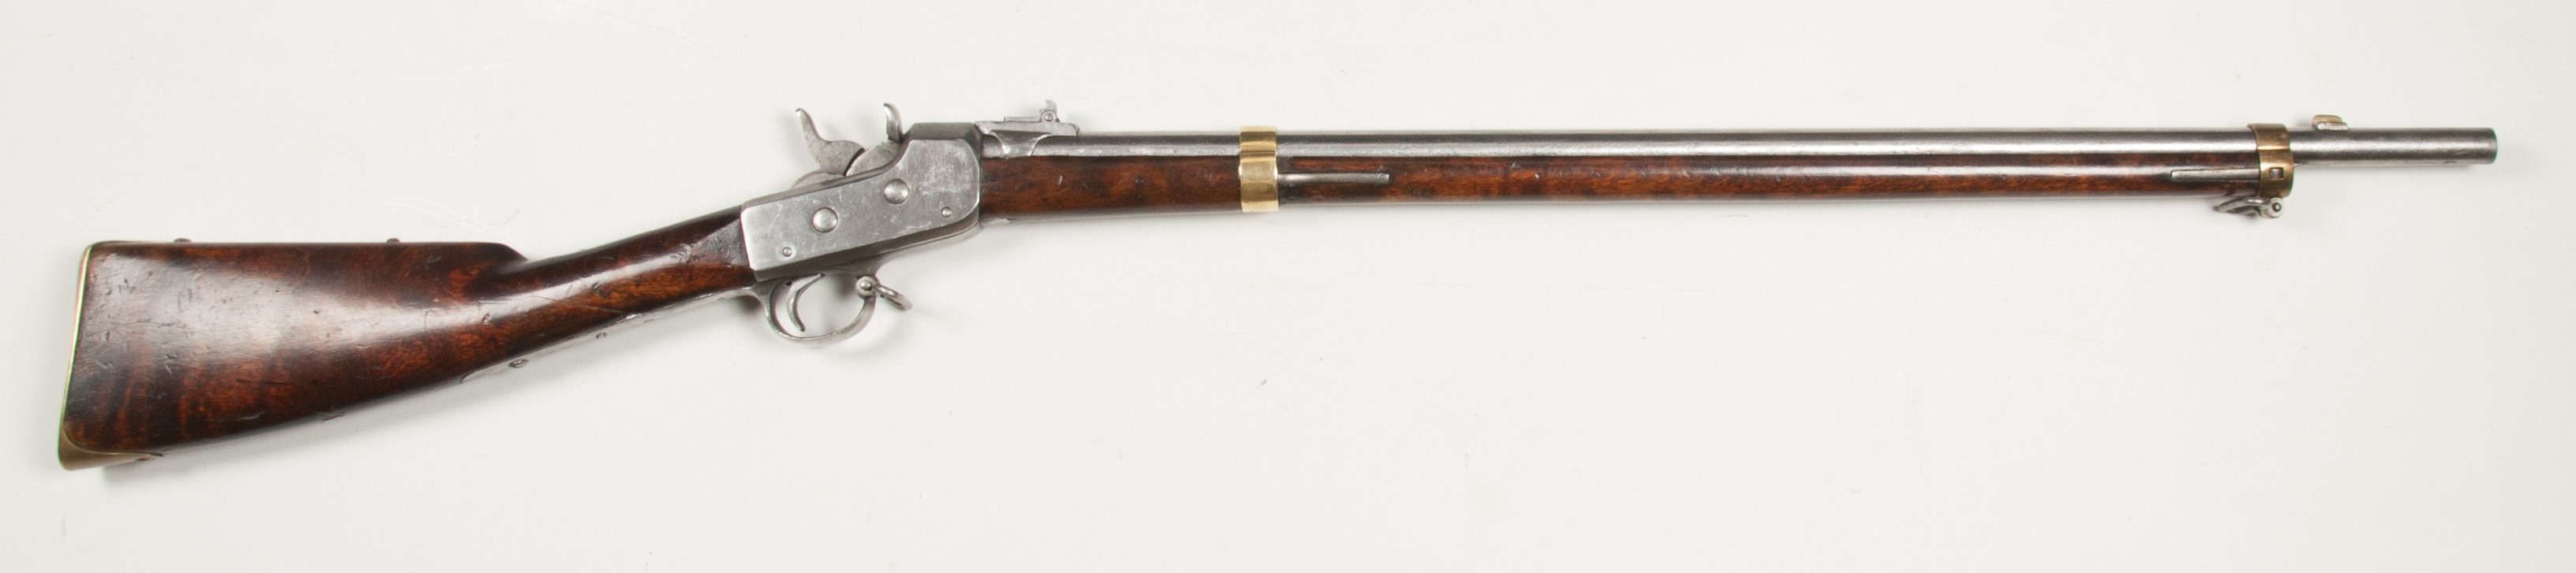 ./guns/rifle/bilder/Rifle-Kongsberg-RollingBlock-M1860-67-MARINE-1868-1210-2.jpg